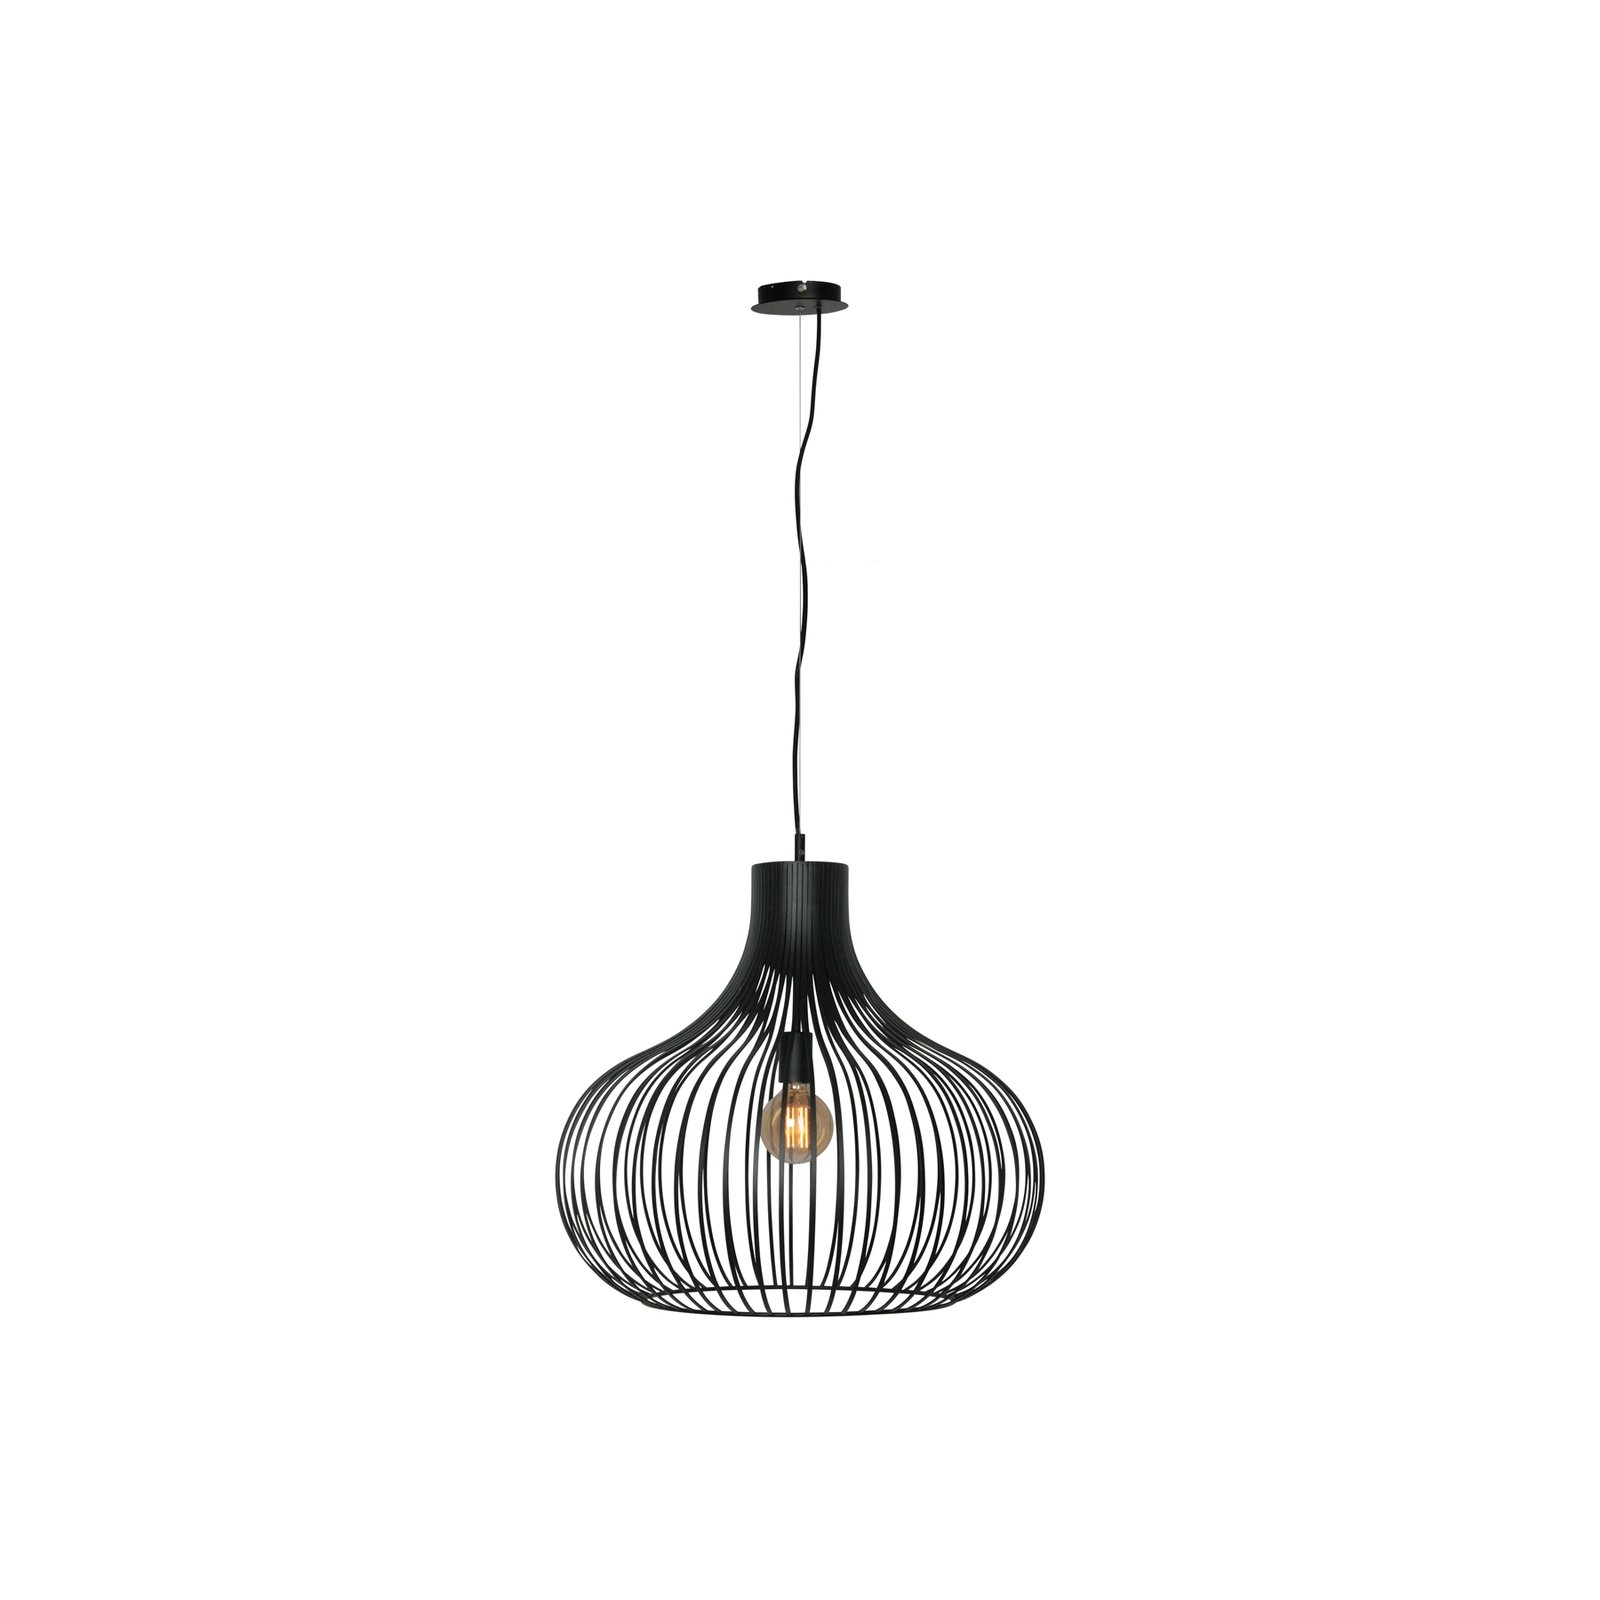 Viseća lampa Aglio, Ø 58 cm, crna, metal